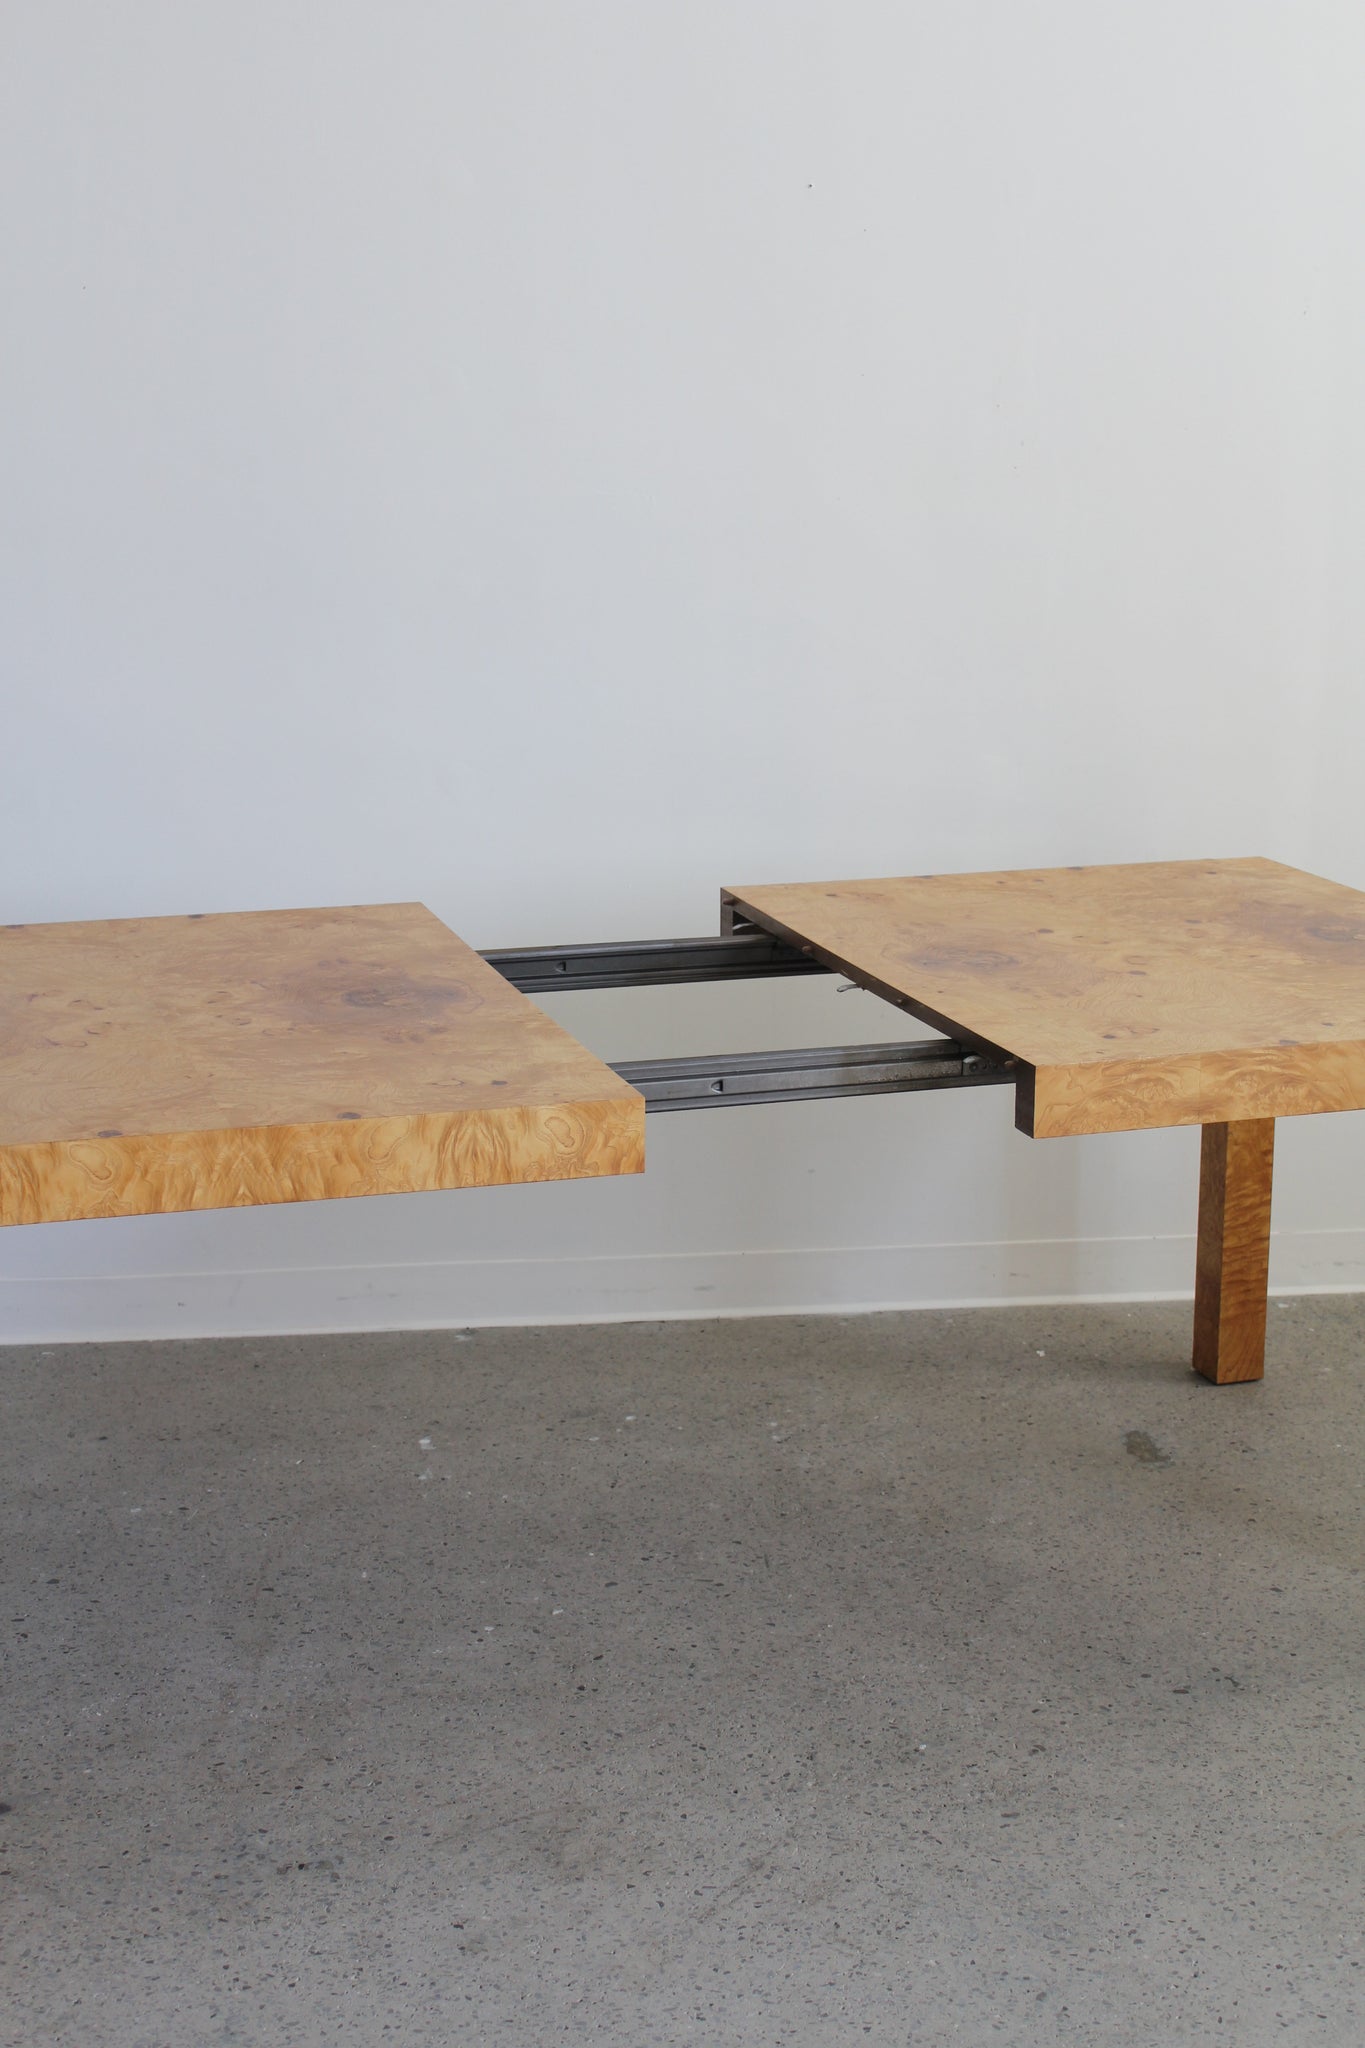 Burlwood Dining Table by Milo Baughman for Lane Furniture